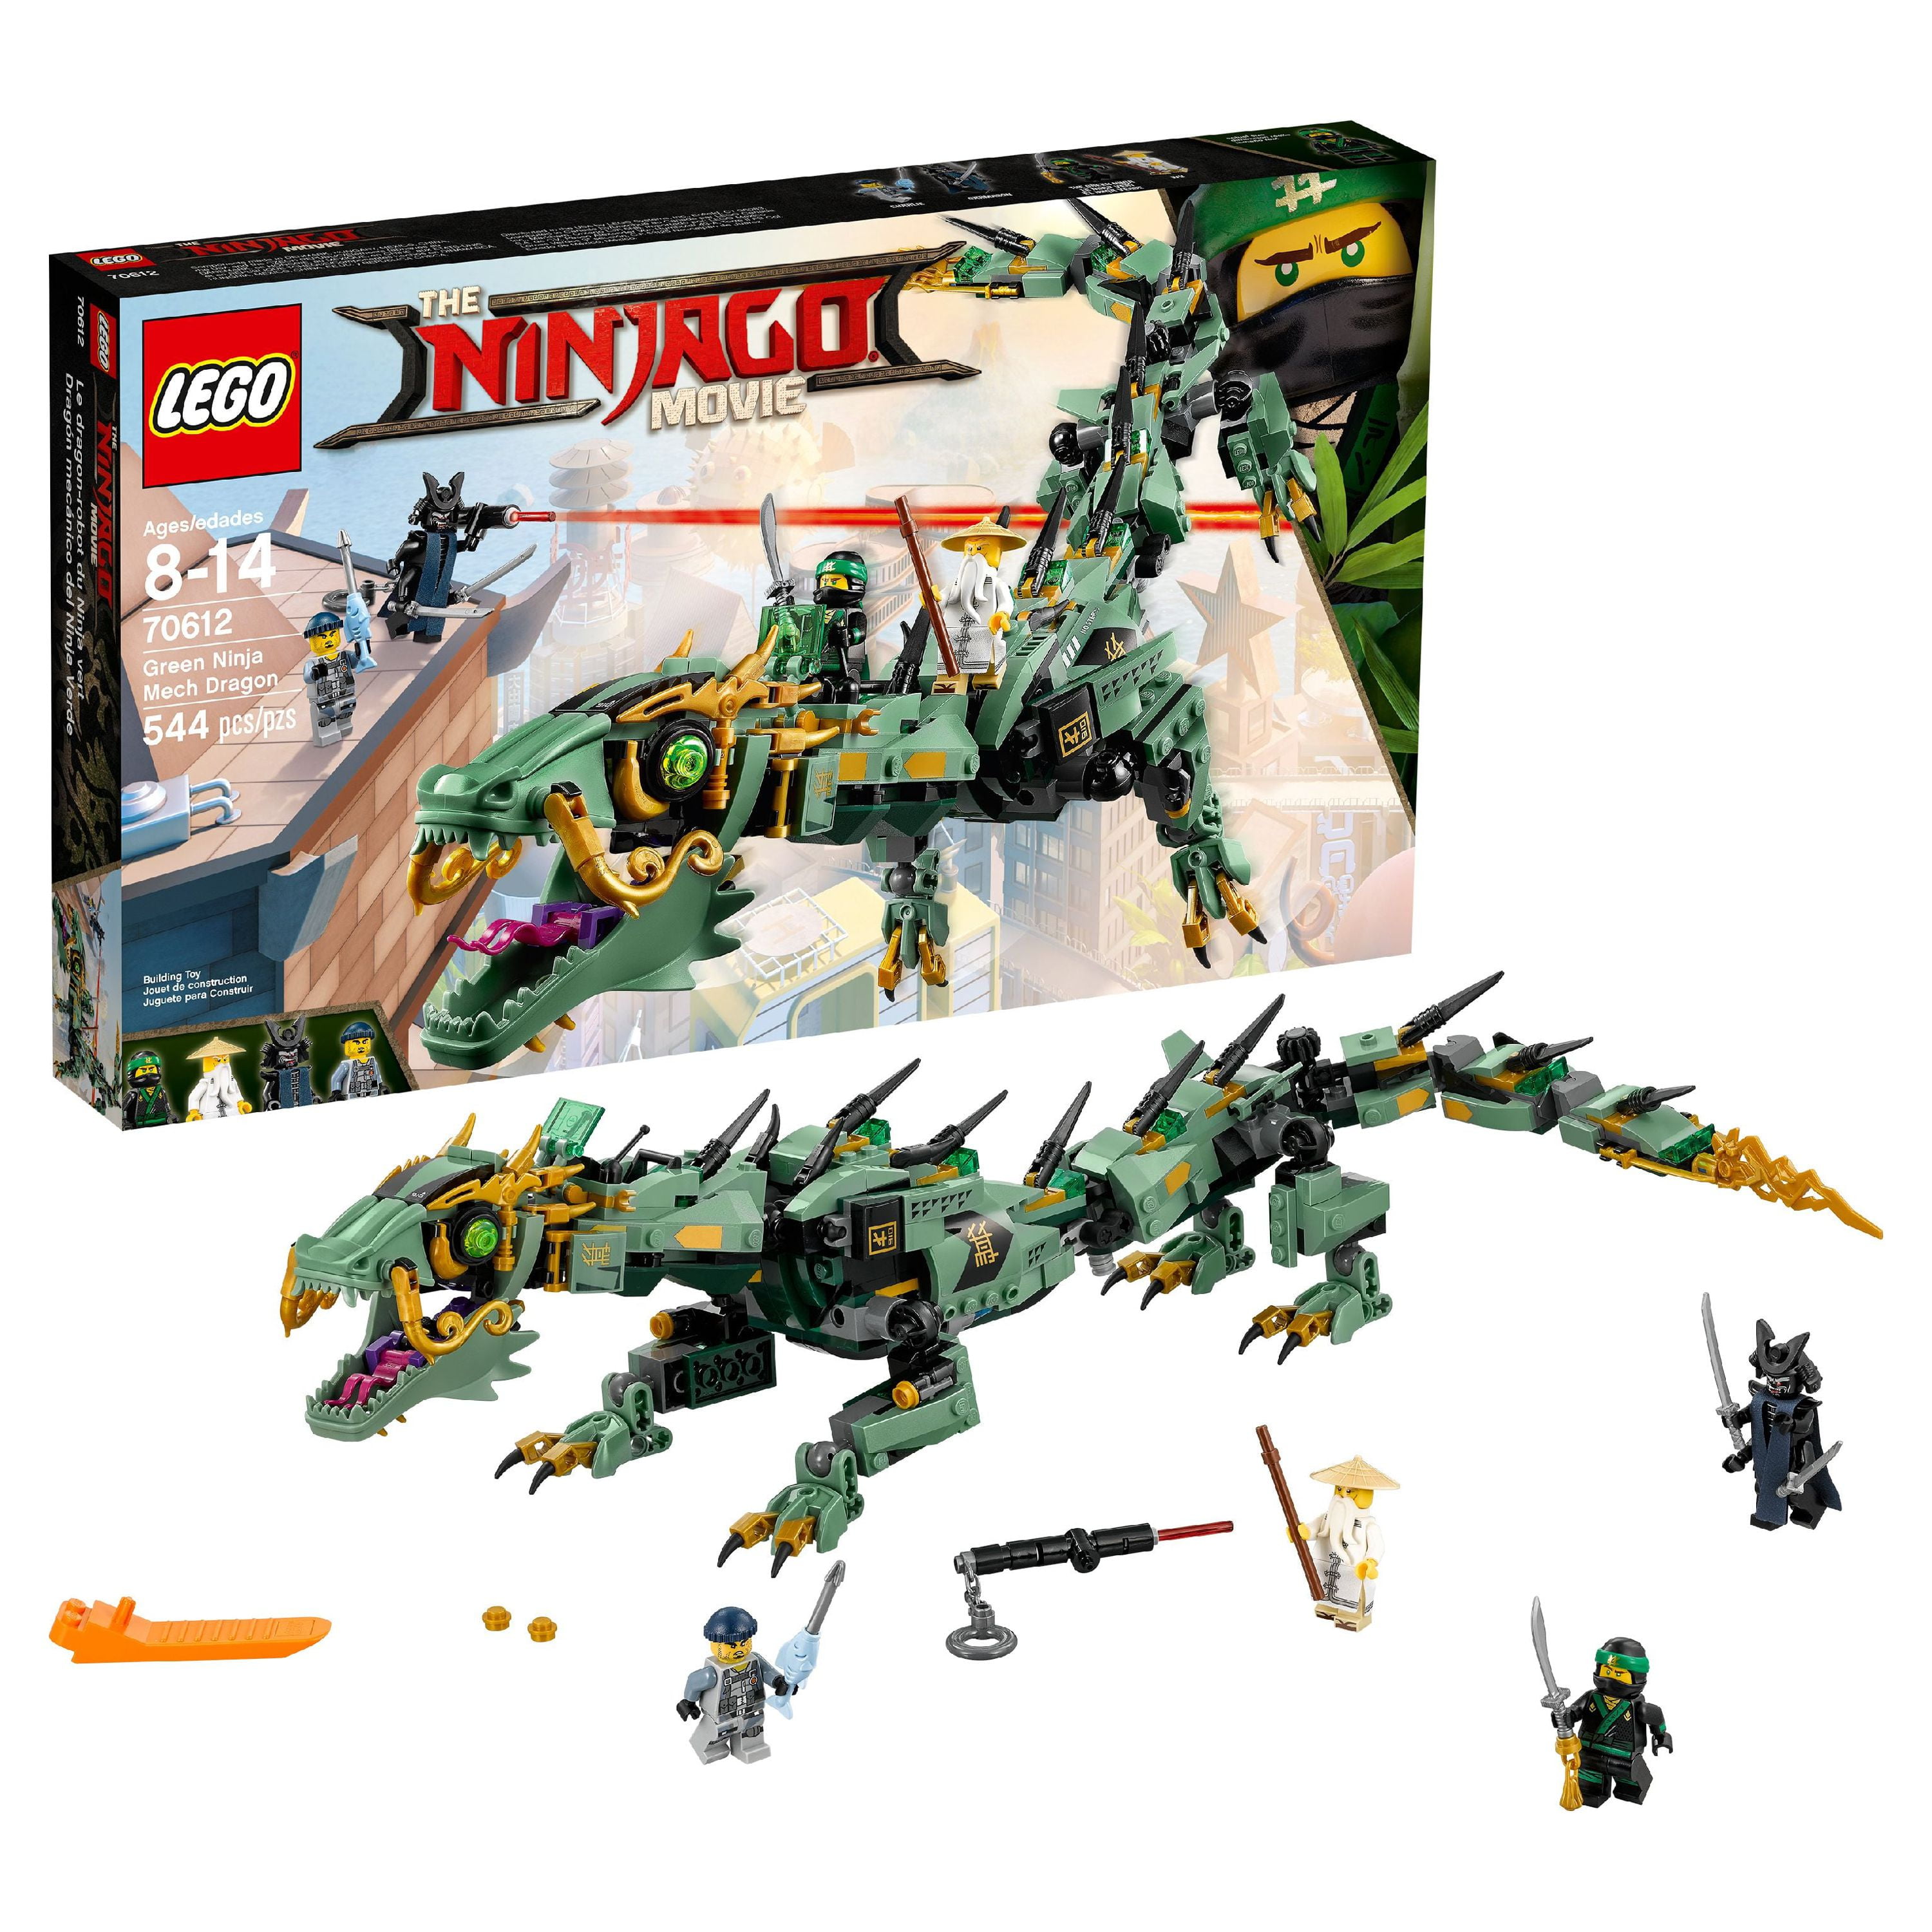 LEGO NINJAGO Movie Green Ninja Mech Dragon 70612 Ninja Toy with Dragon  Figurine Building Kit (544 Pieces) (Discontinued by Manufacturer)